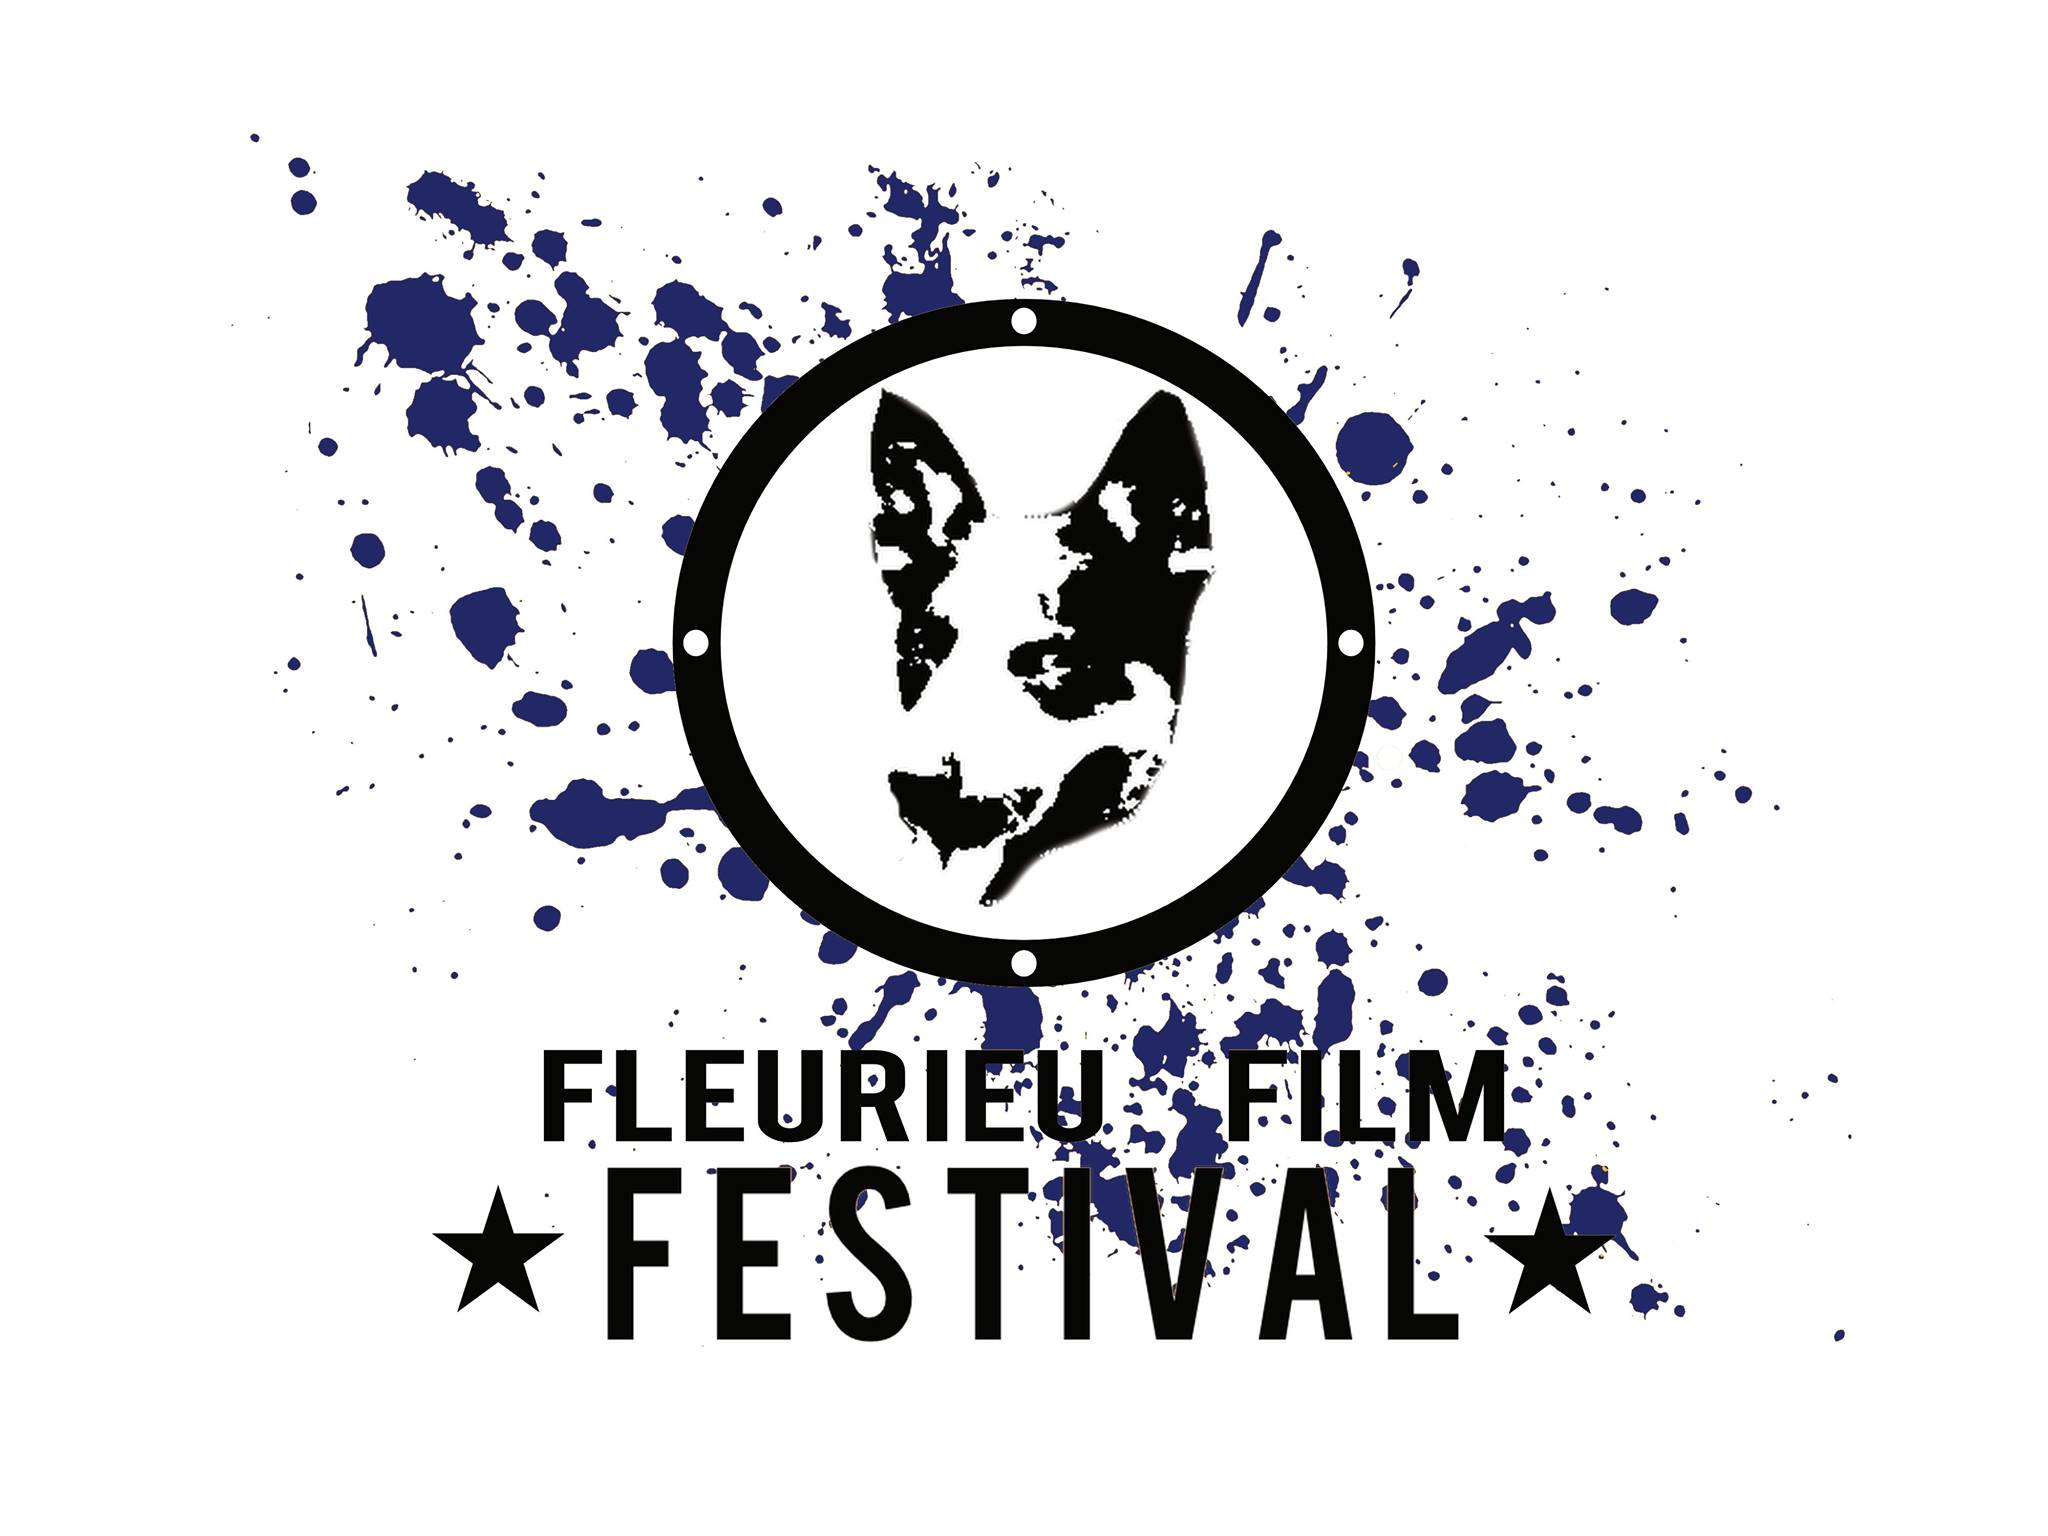 Fleurieu Film Festival - St Kilda Accommodation